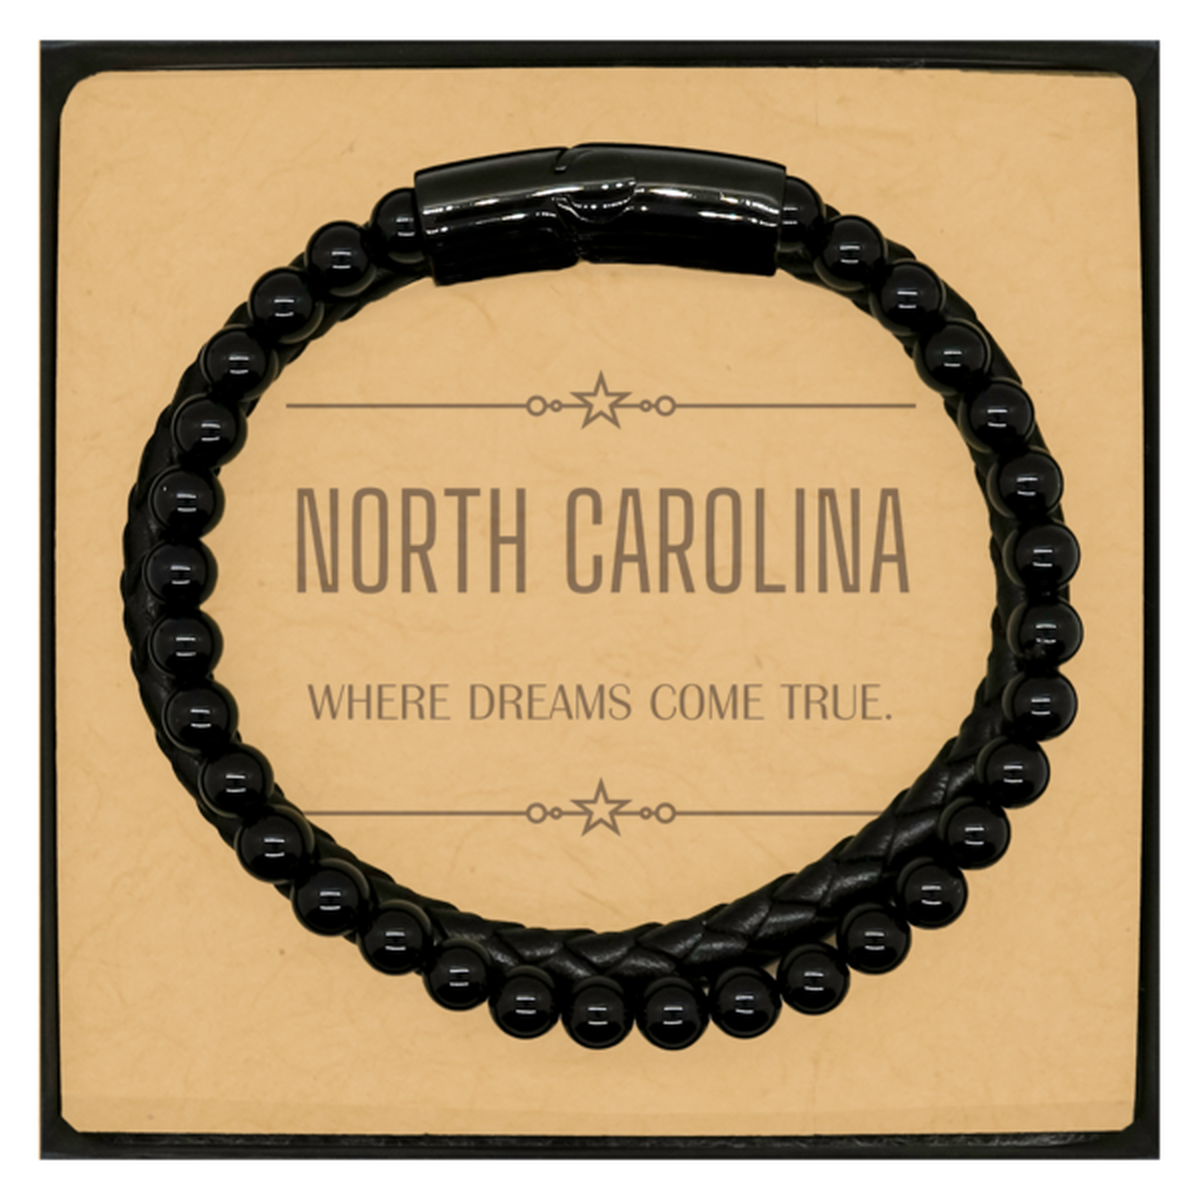 Love North Carolina State Stone Leather Bracelets, North Carolina Where dreams come true, Birthday Christmas Inspirational Gifts For North Carolina Men, Women, Friends